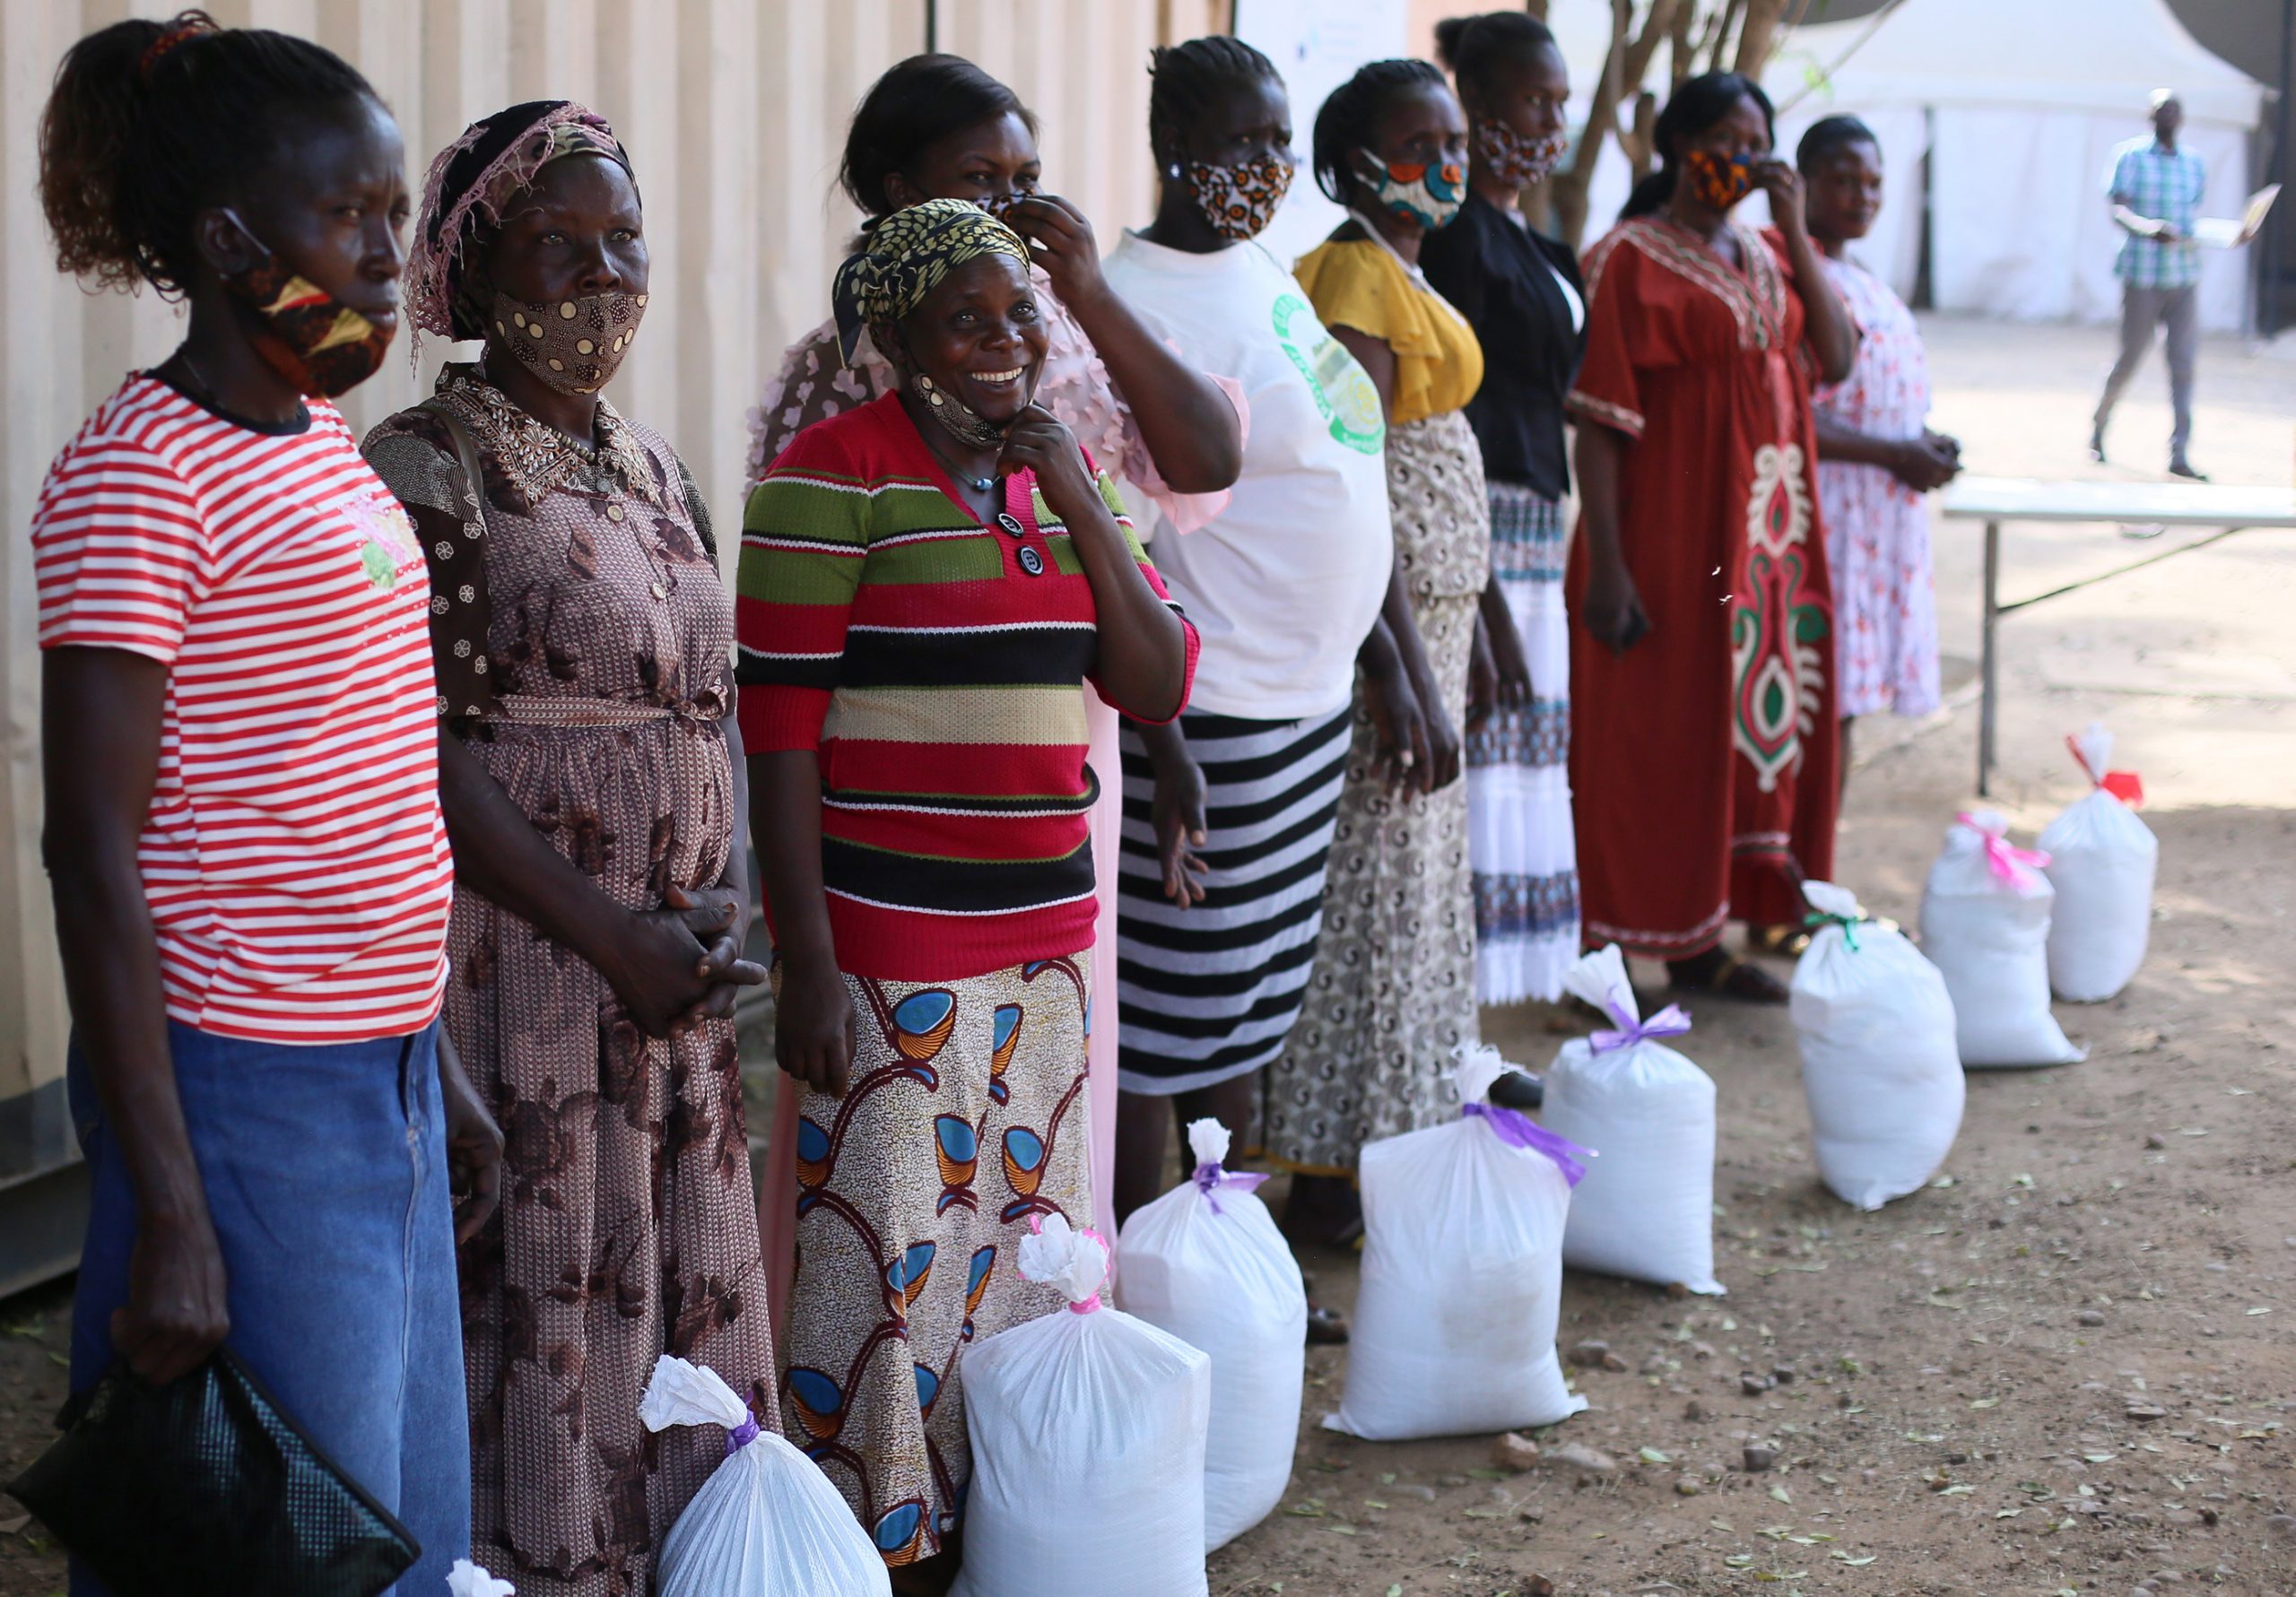 Women waiting for food supplies in Juba